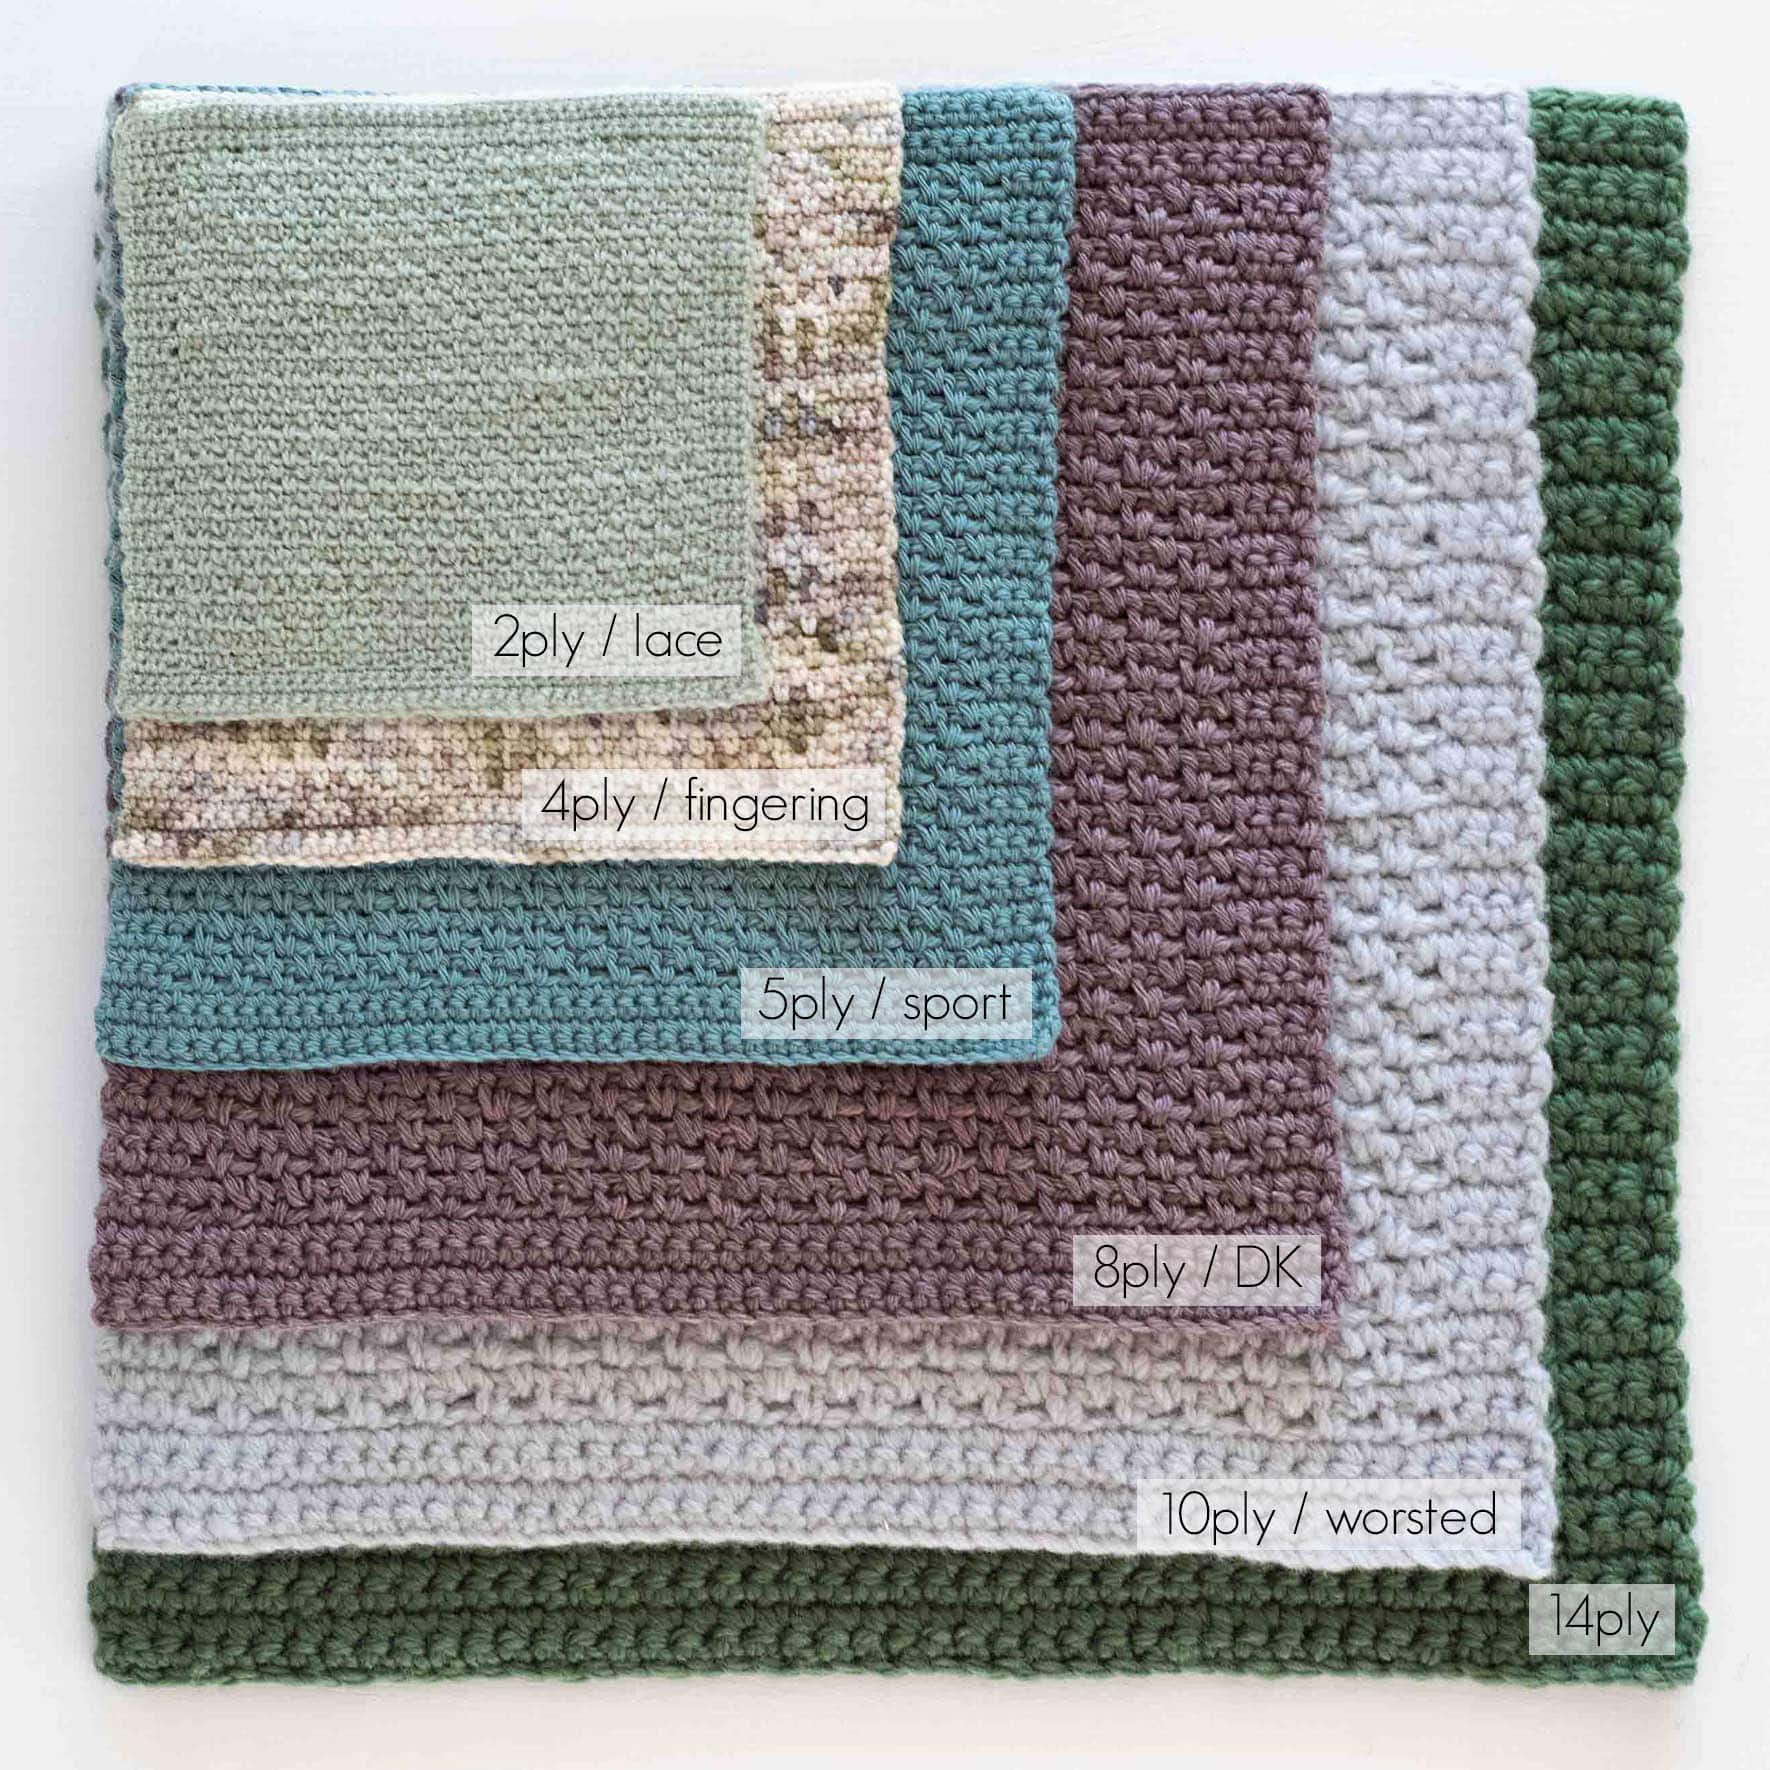 NEW: Yarn Advent-ure Blanket crochet pattern with tutorials